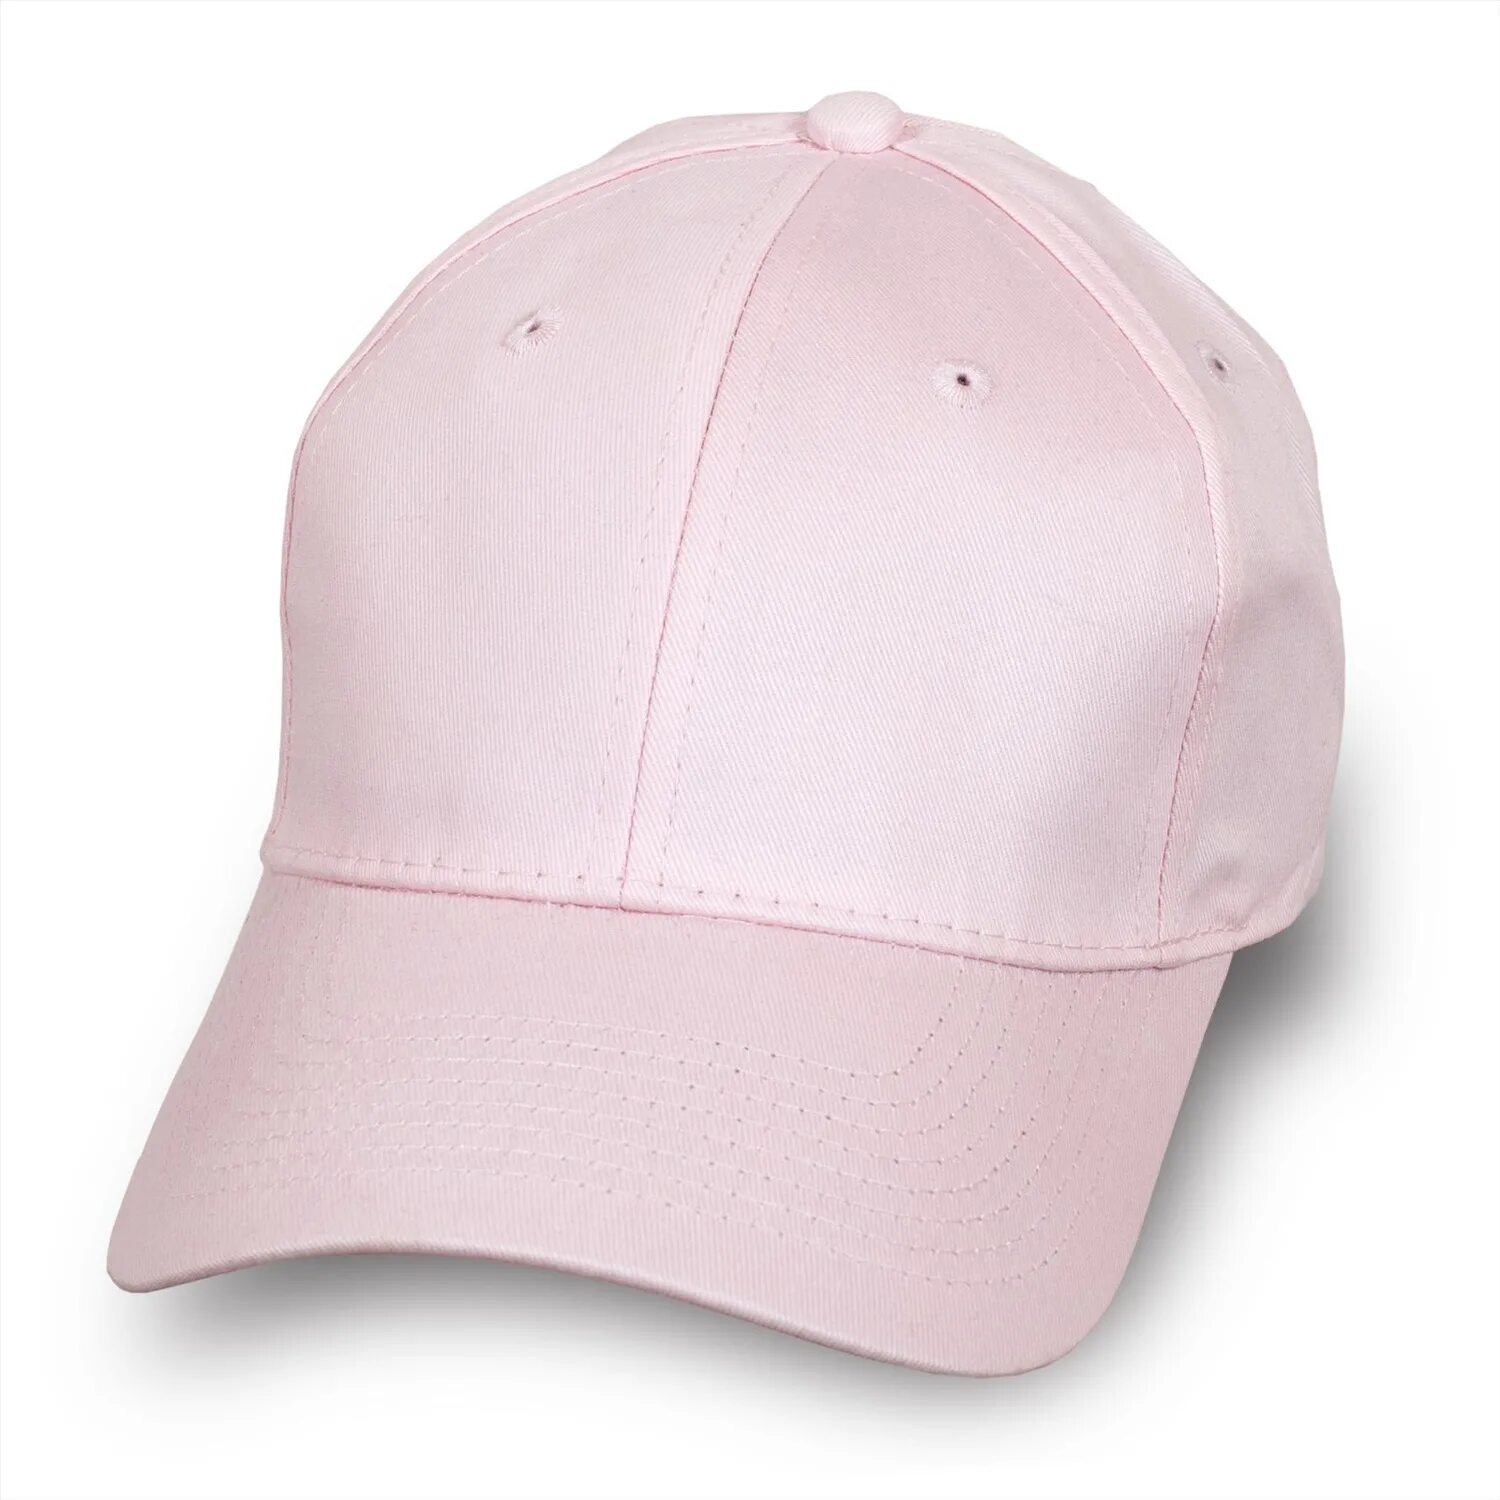 Вб кепки. New era кепка розовая велюровая. Кепка Стефани белый 54. Тигер кепка женская 2021 валберис. Розовая кепка.